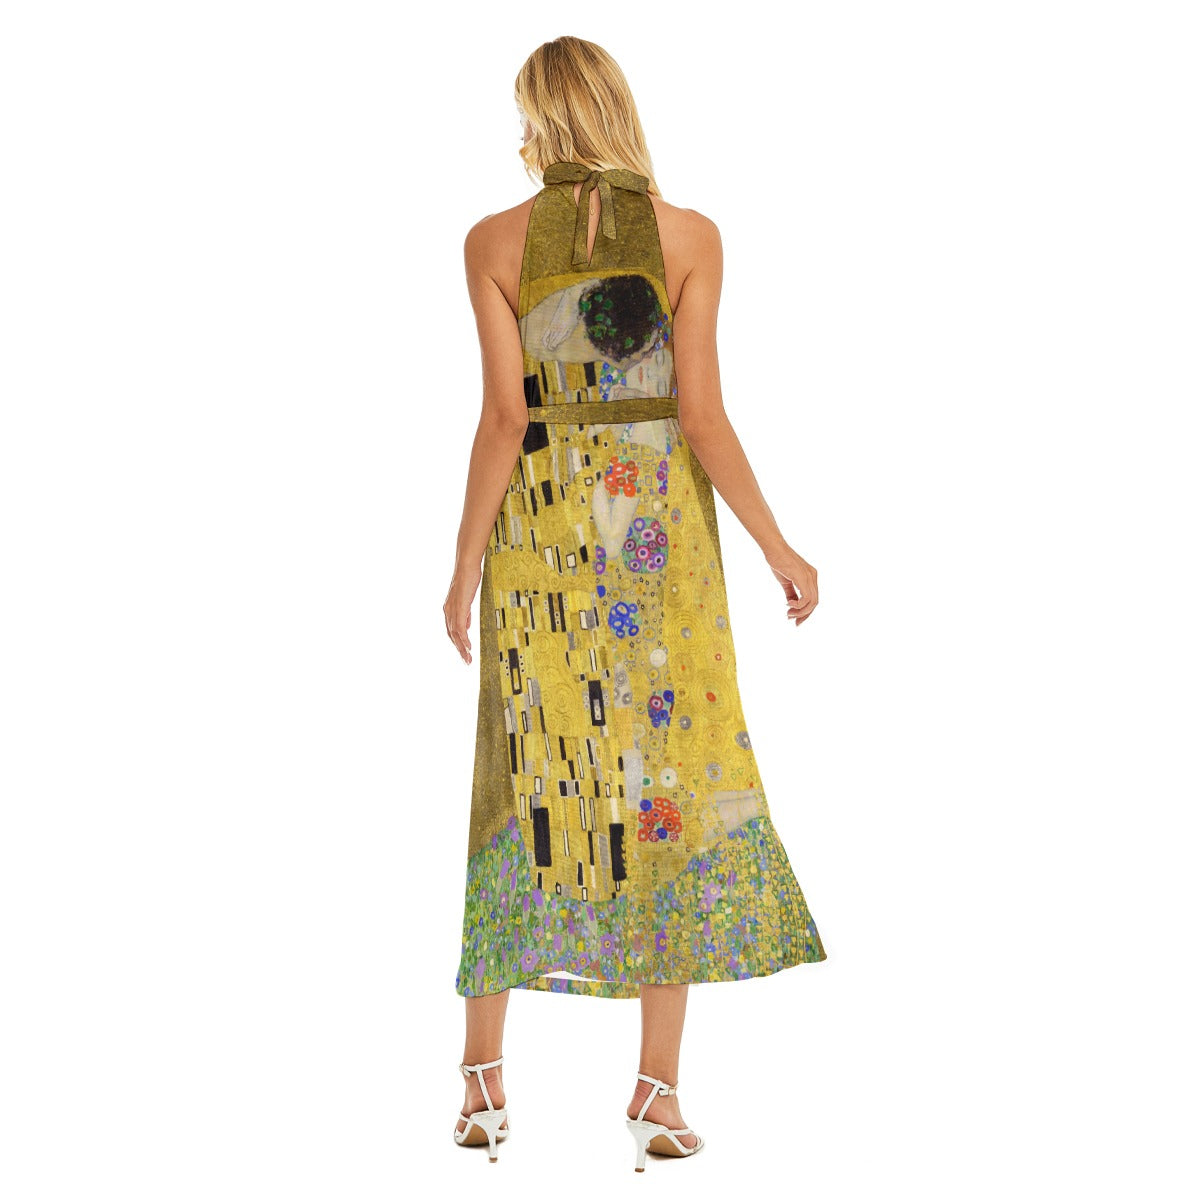 Iconic Gustav Klimt Art Dress